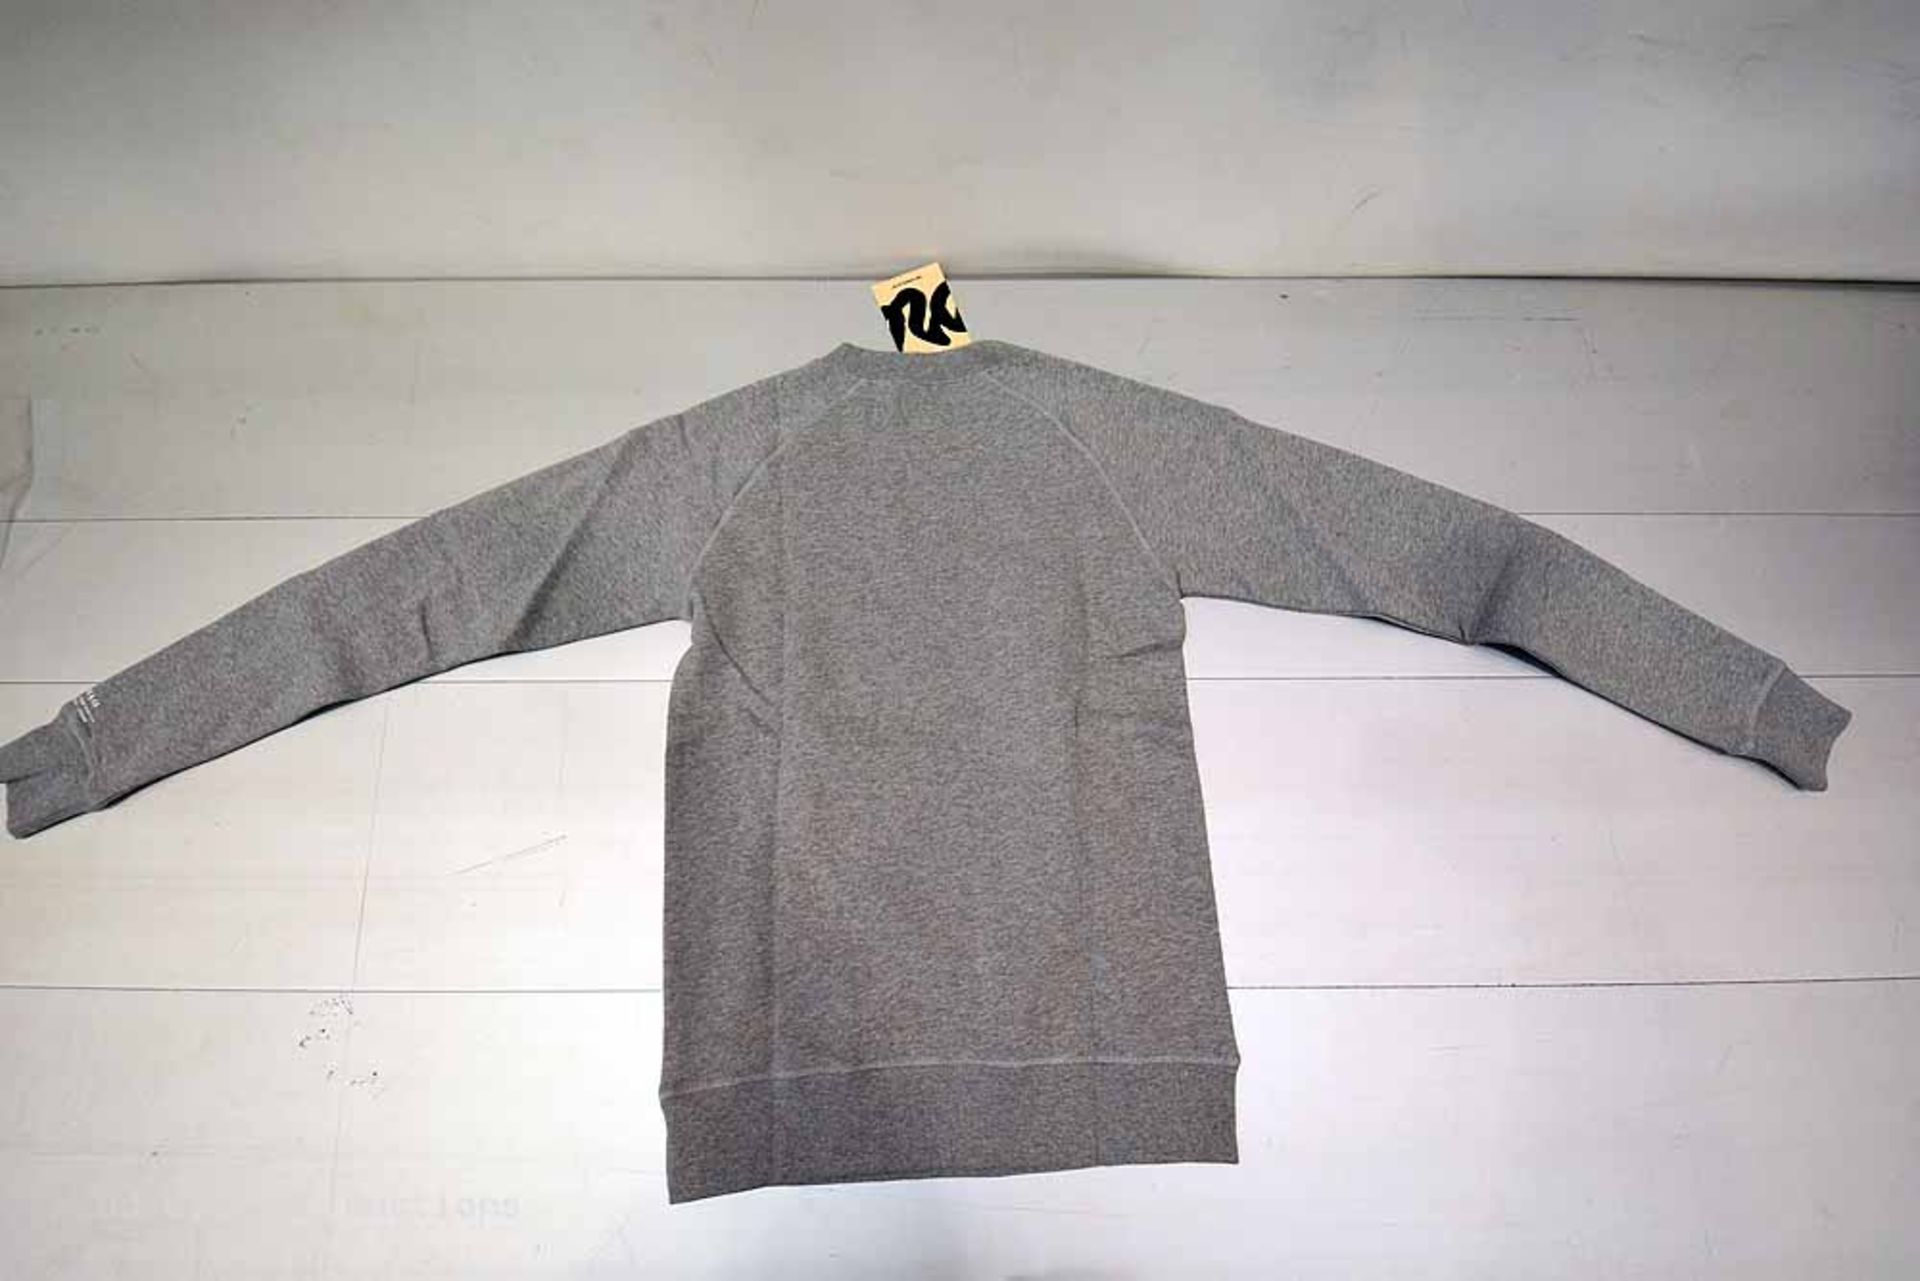 The Cords & Co."Jog" Zip-Up Hooded Sweater "Jack" Uni-Sex Button-Up Light Jacker"Lou"Uni-Sex Sweater - Image 6 of 10